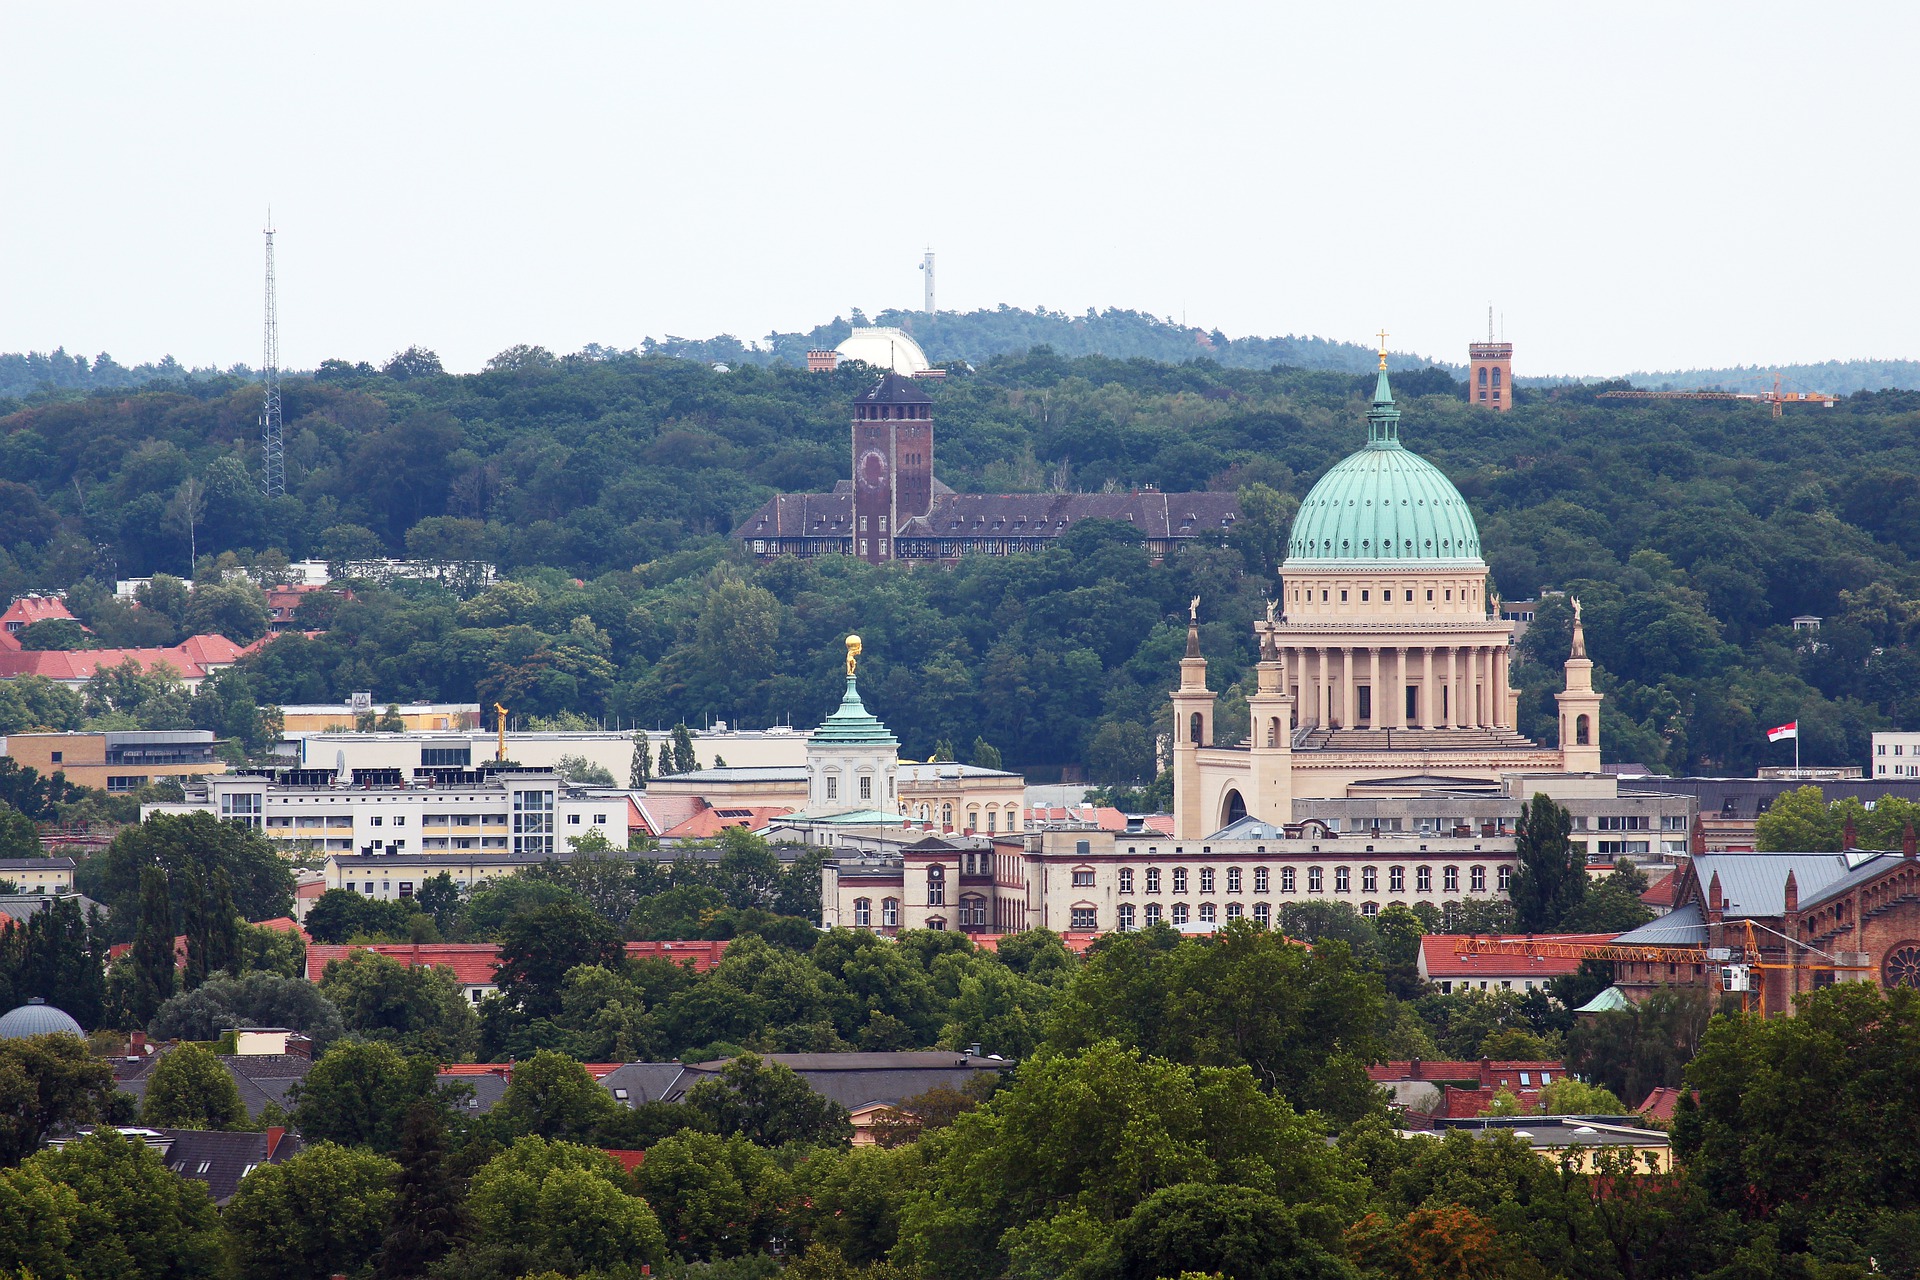 Views from Potsdam